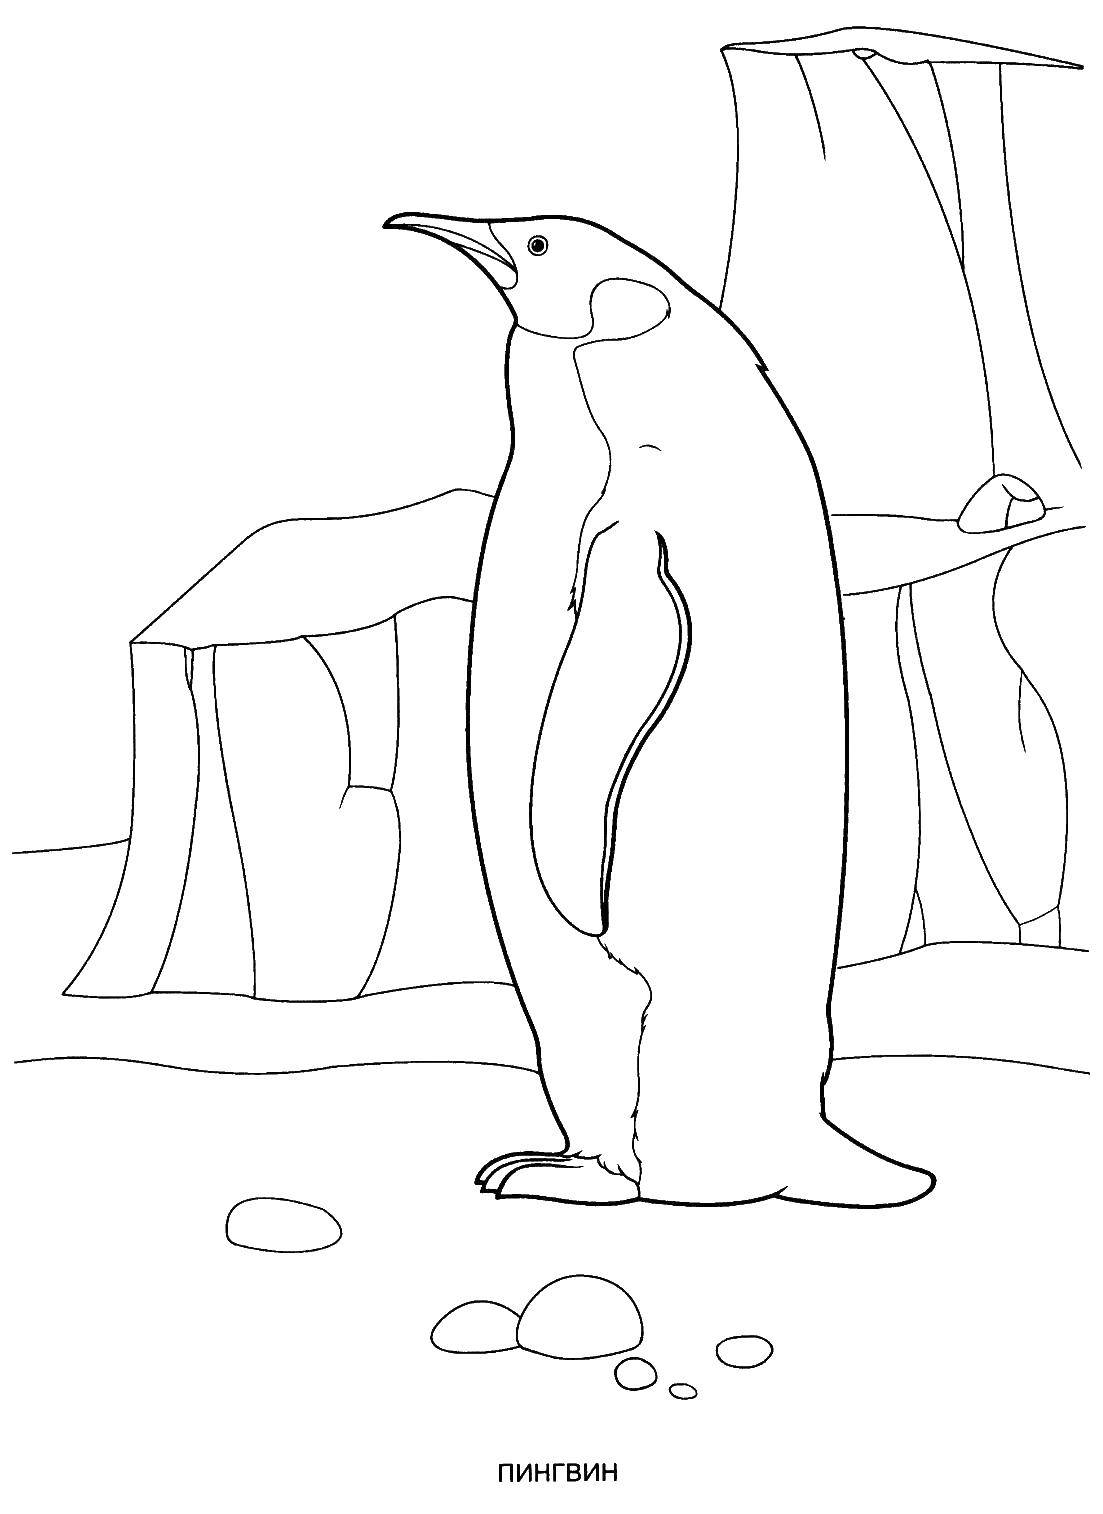 Пингвин раскраска - 76 фото